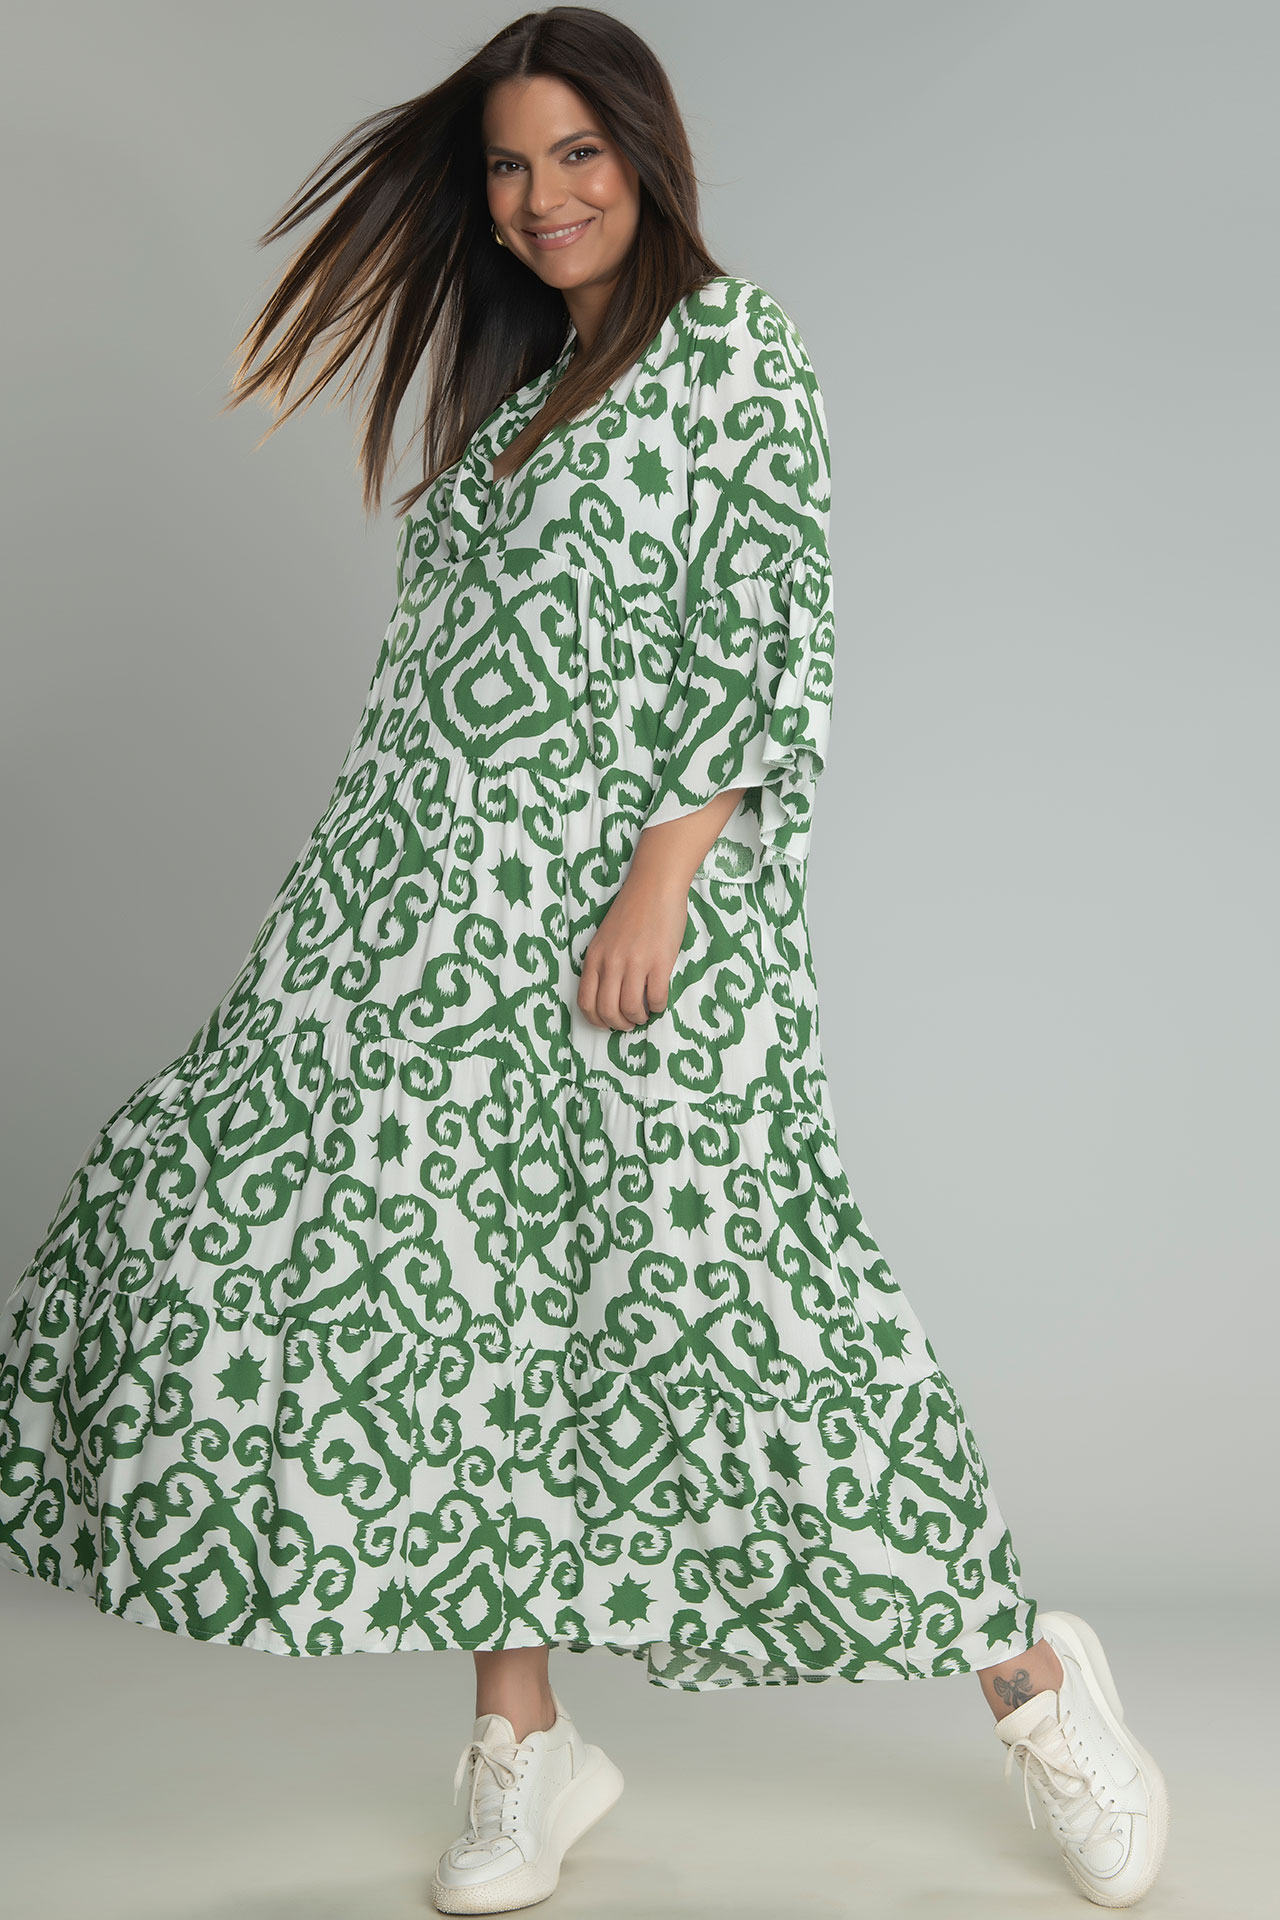 Plus Size Maxi Dresses, Sizes 10 - 36 | Ashley Stewart